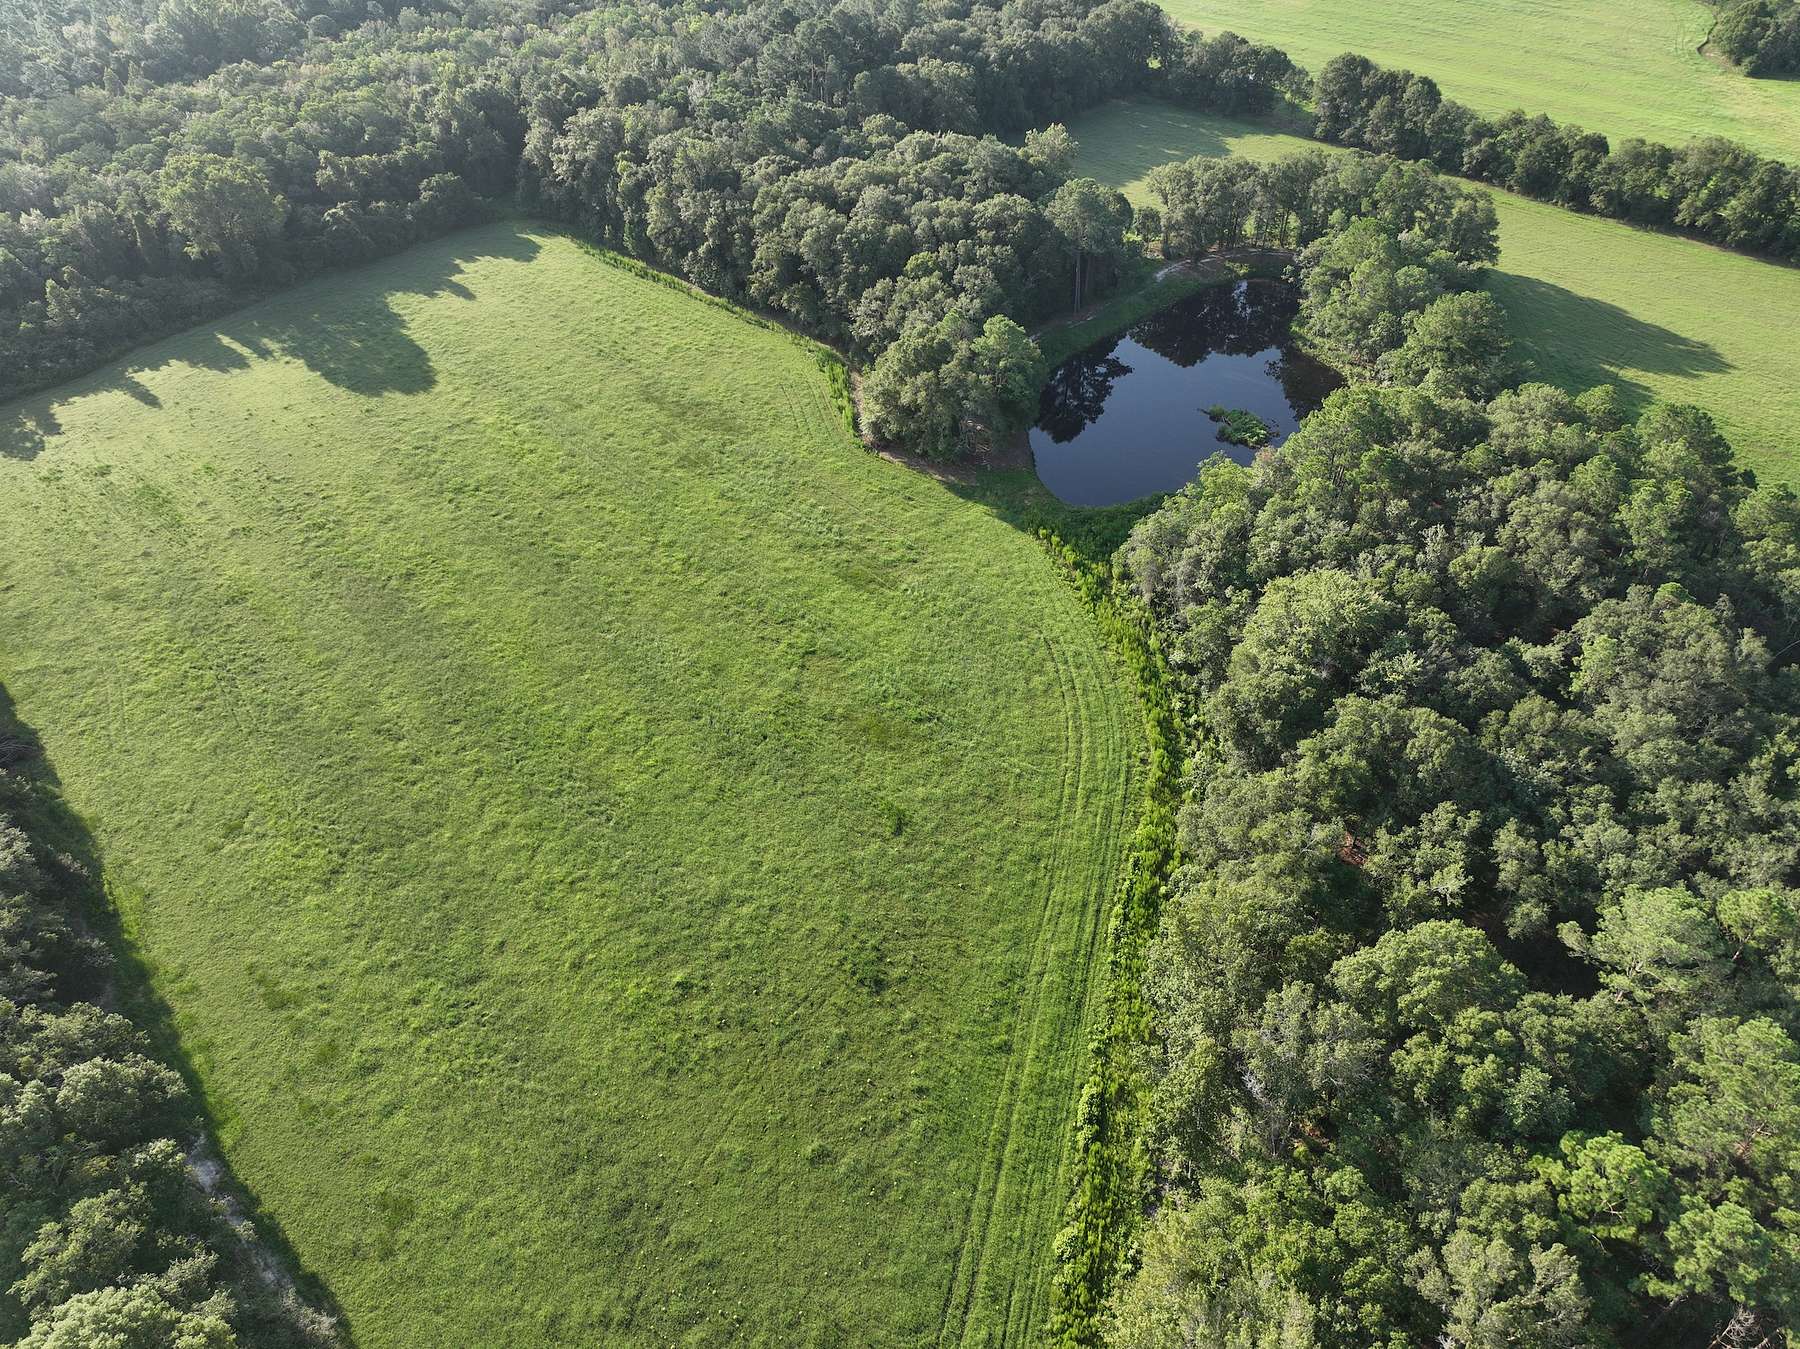 95 Acres of Land for Sale in Hazlehurst, Georgia